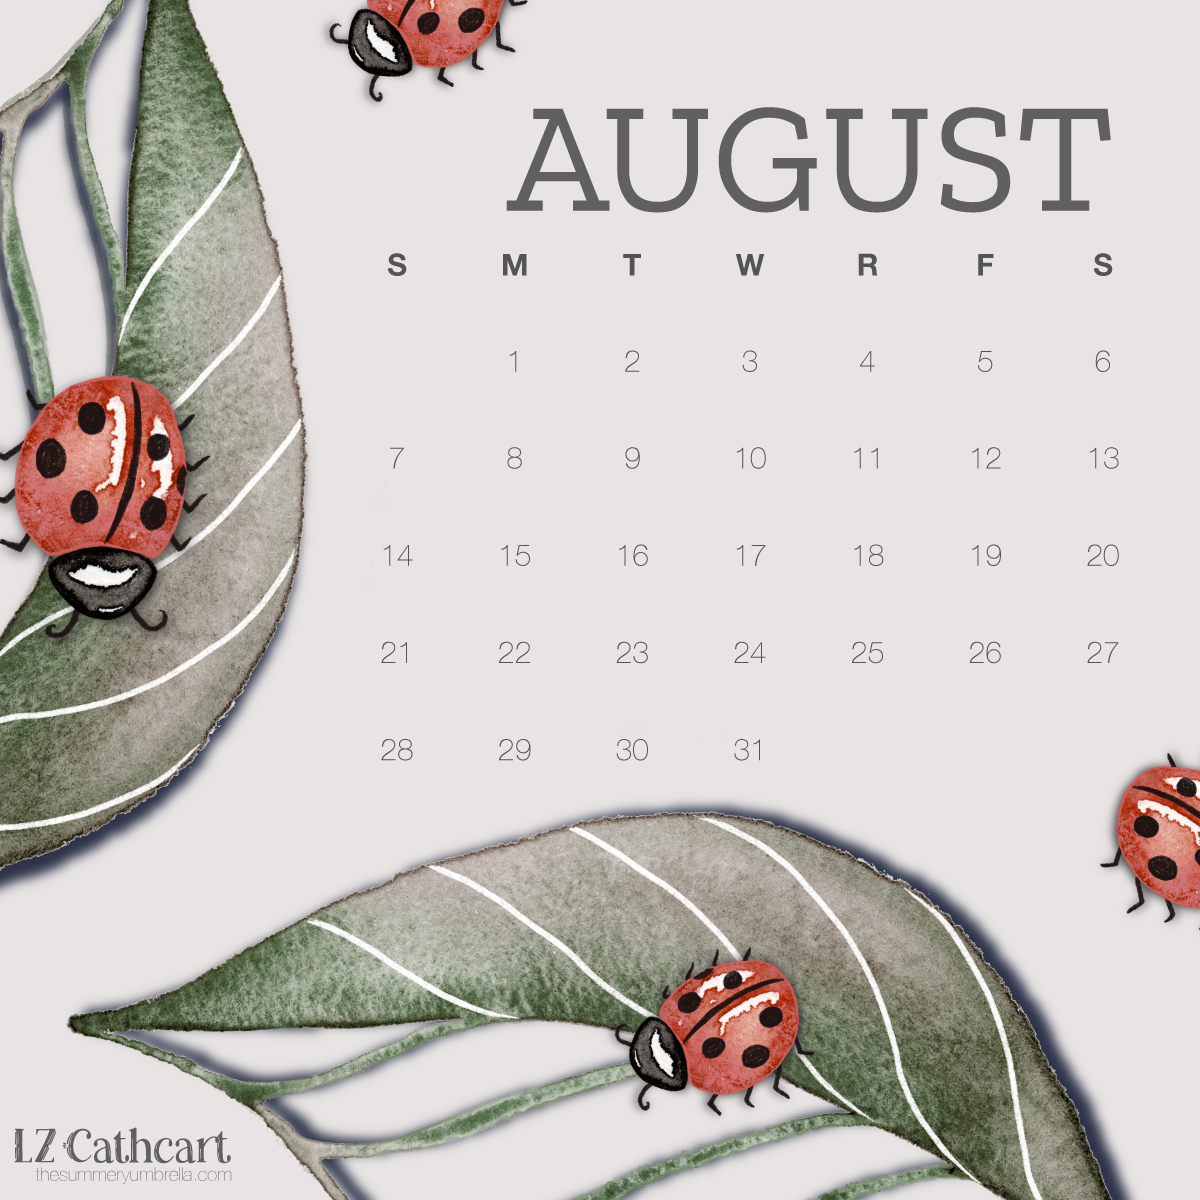 FREE August Calendar Download: Desktop and Smartphone Backgrounds